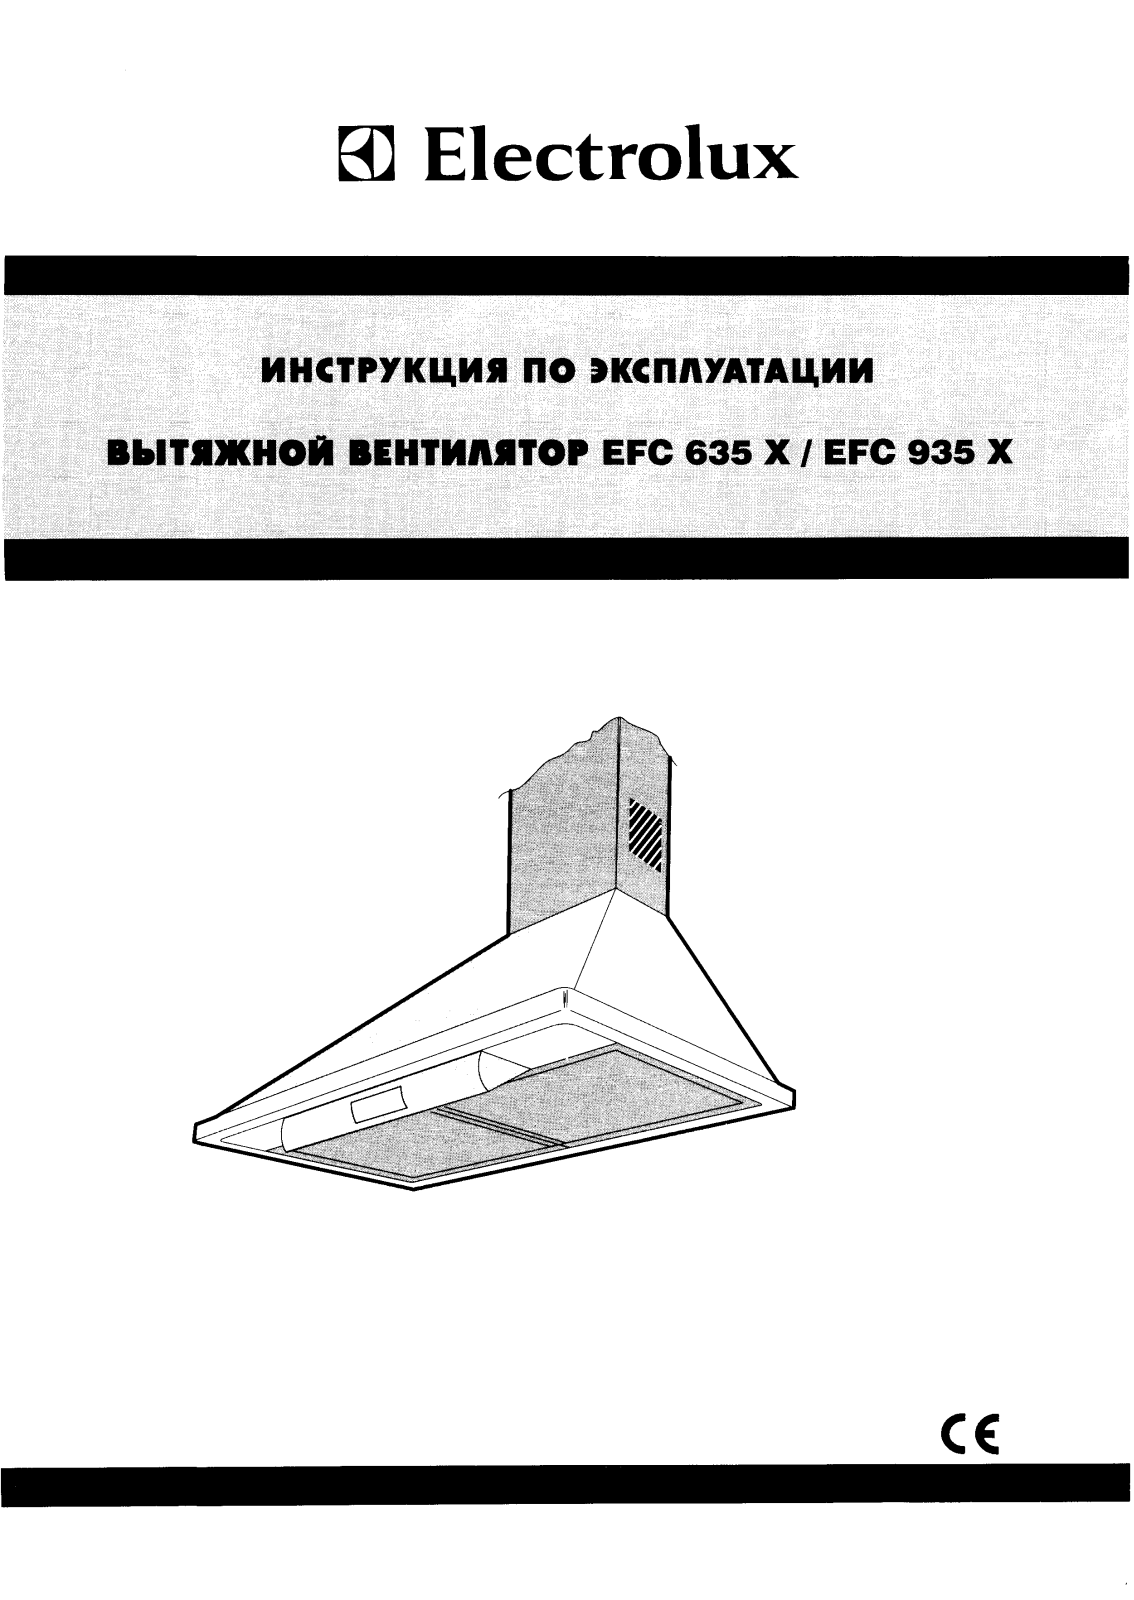 Electrolux EFC 935 X, EFC 635 X User Manual